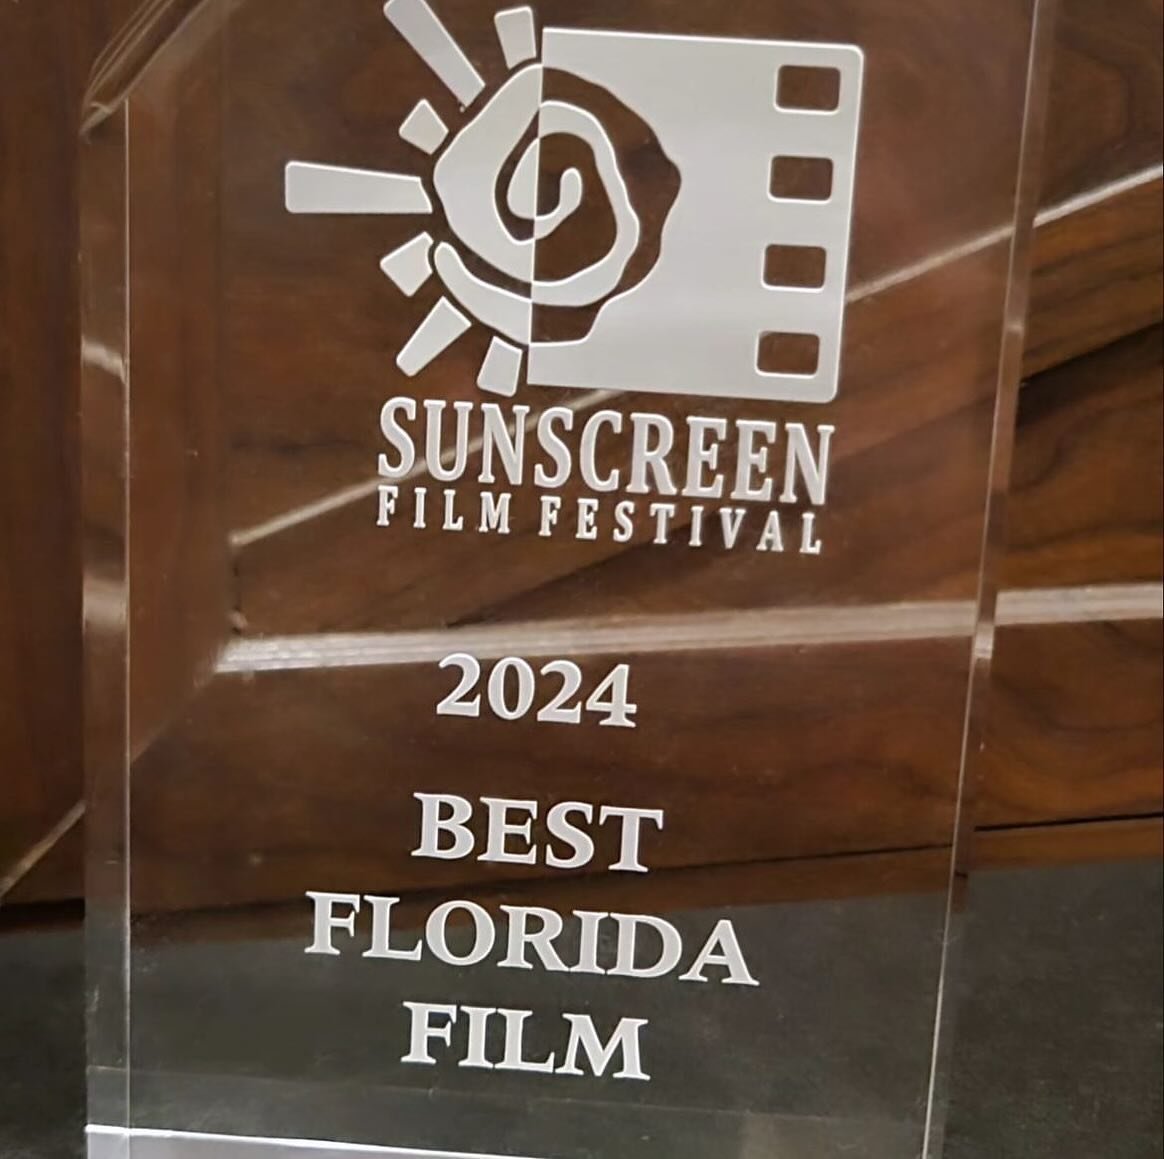 Congratulations @stevenadamstein @melvin.audaz @michaelrobertkessler and team! We did it! &ldquo;Best Florida Film&rdquo; award presented by @sunscreenffstpete for #DeepAwakening @wheretherainbowsarebornfilms